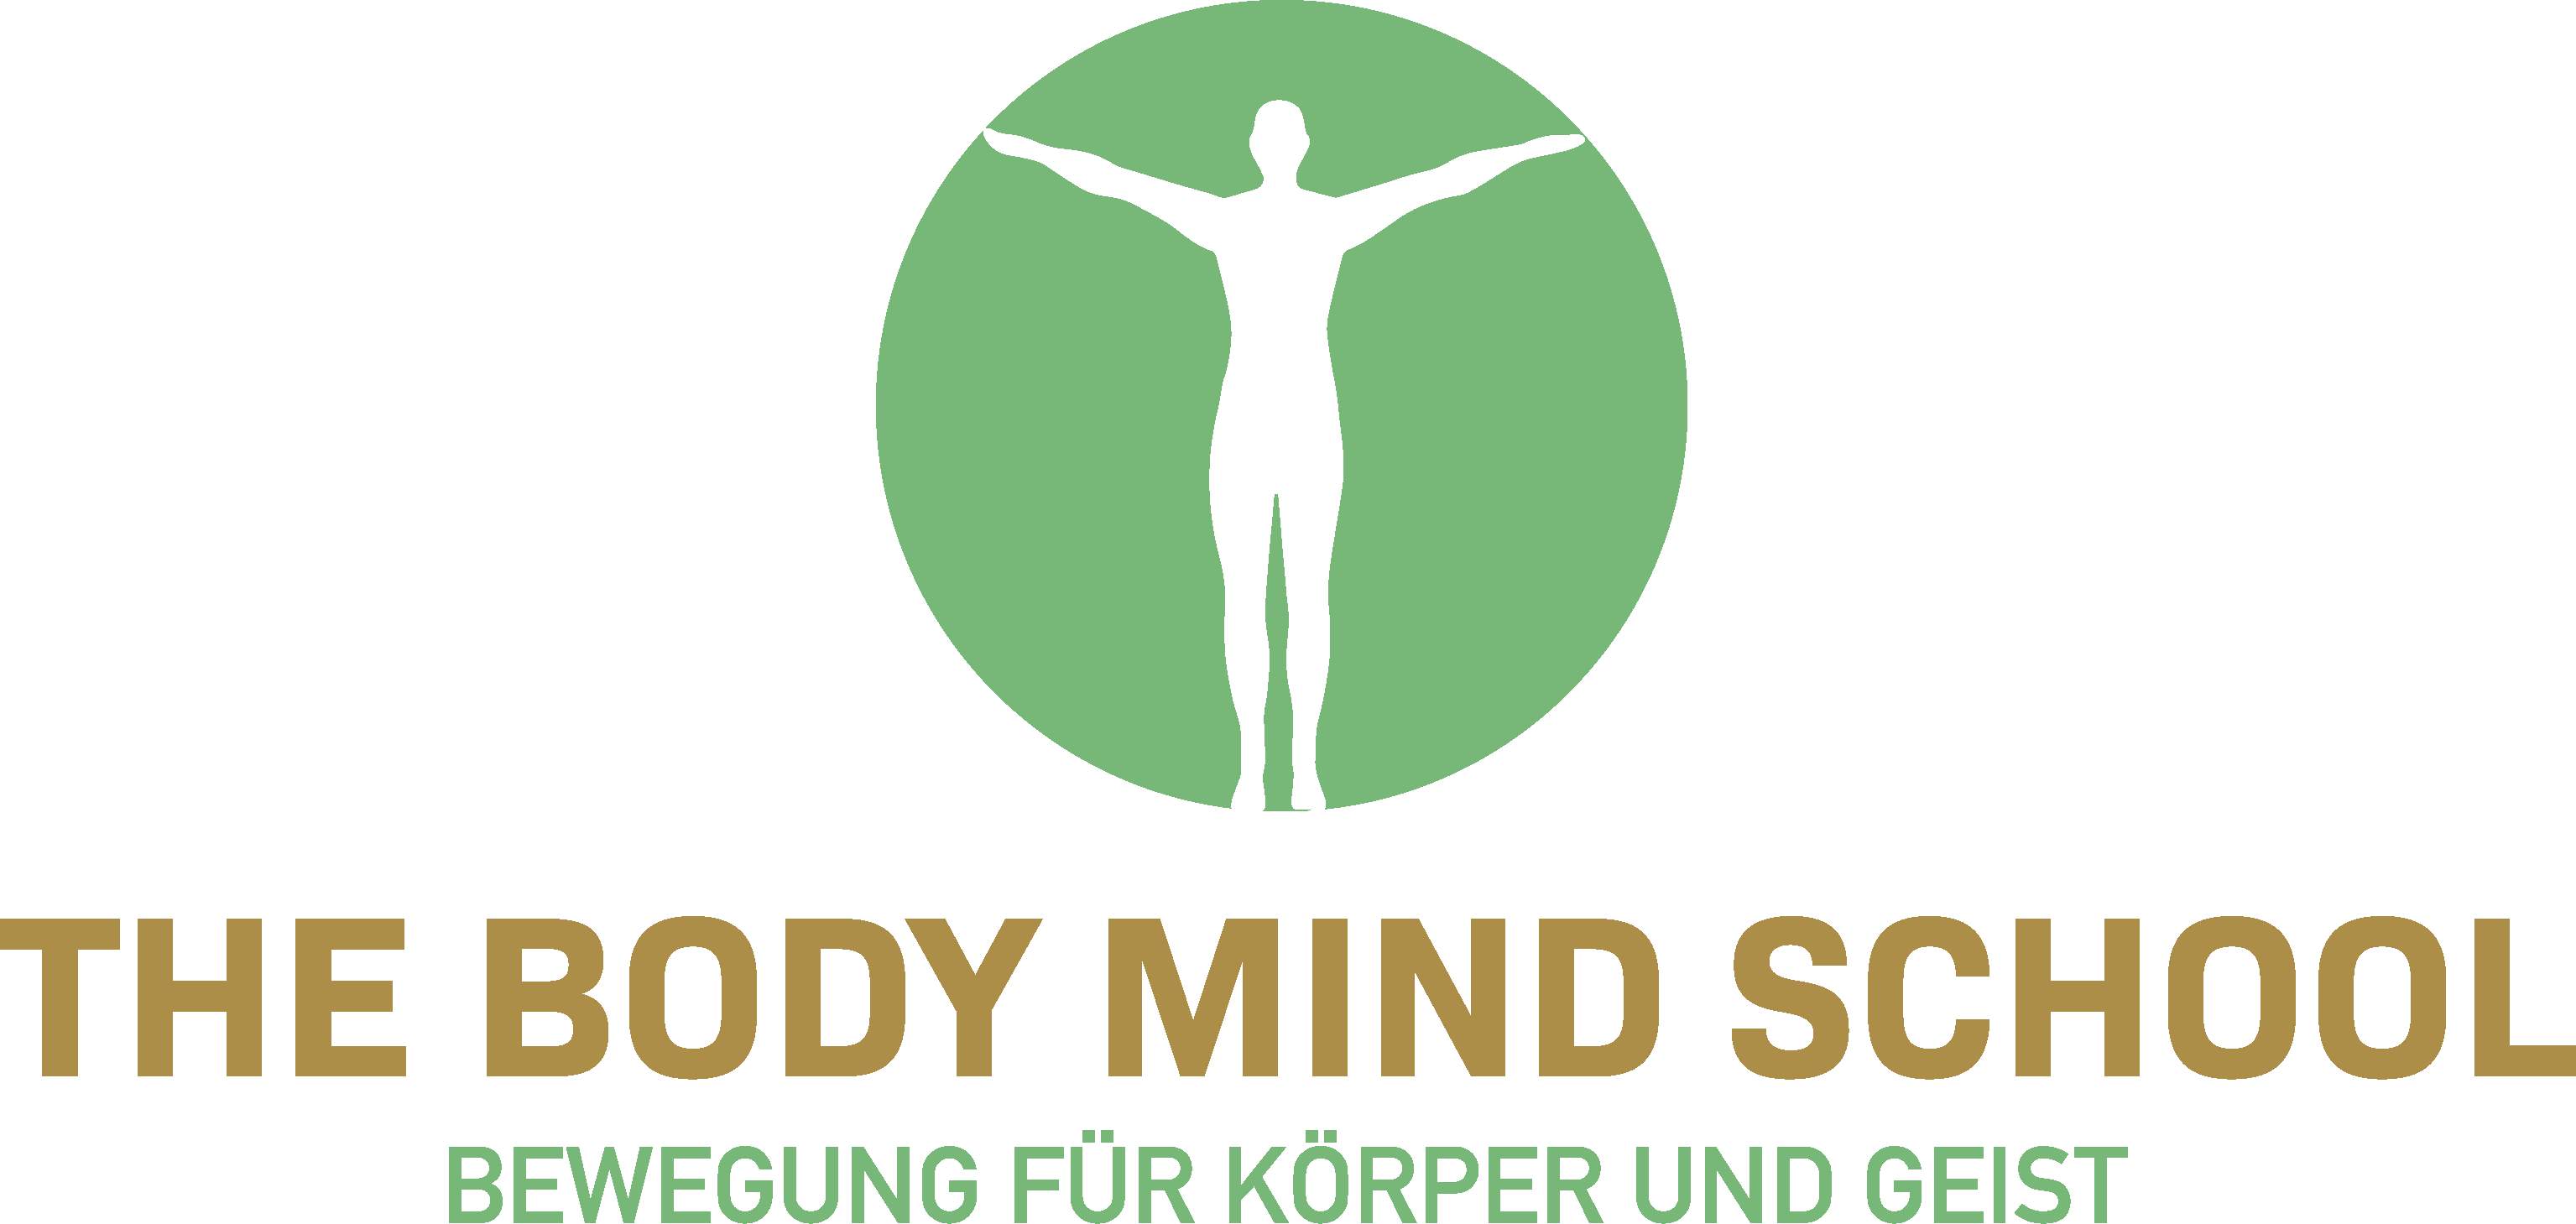 The Body Mind School Logo